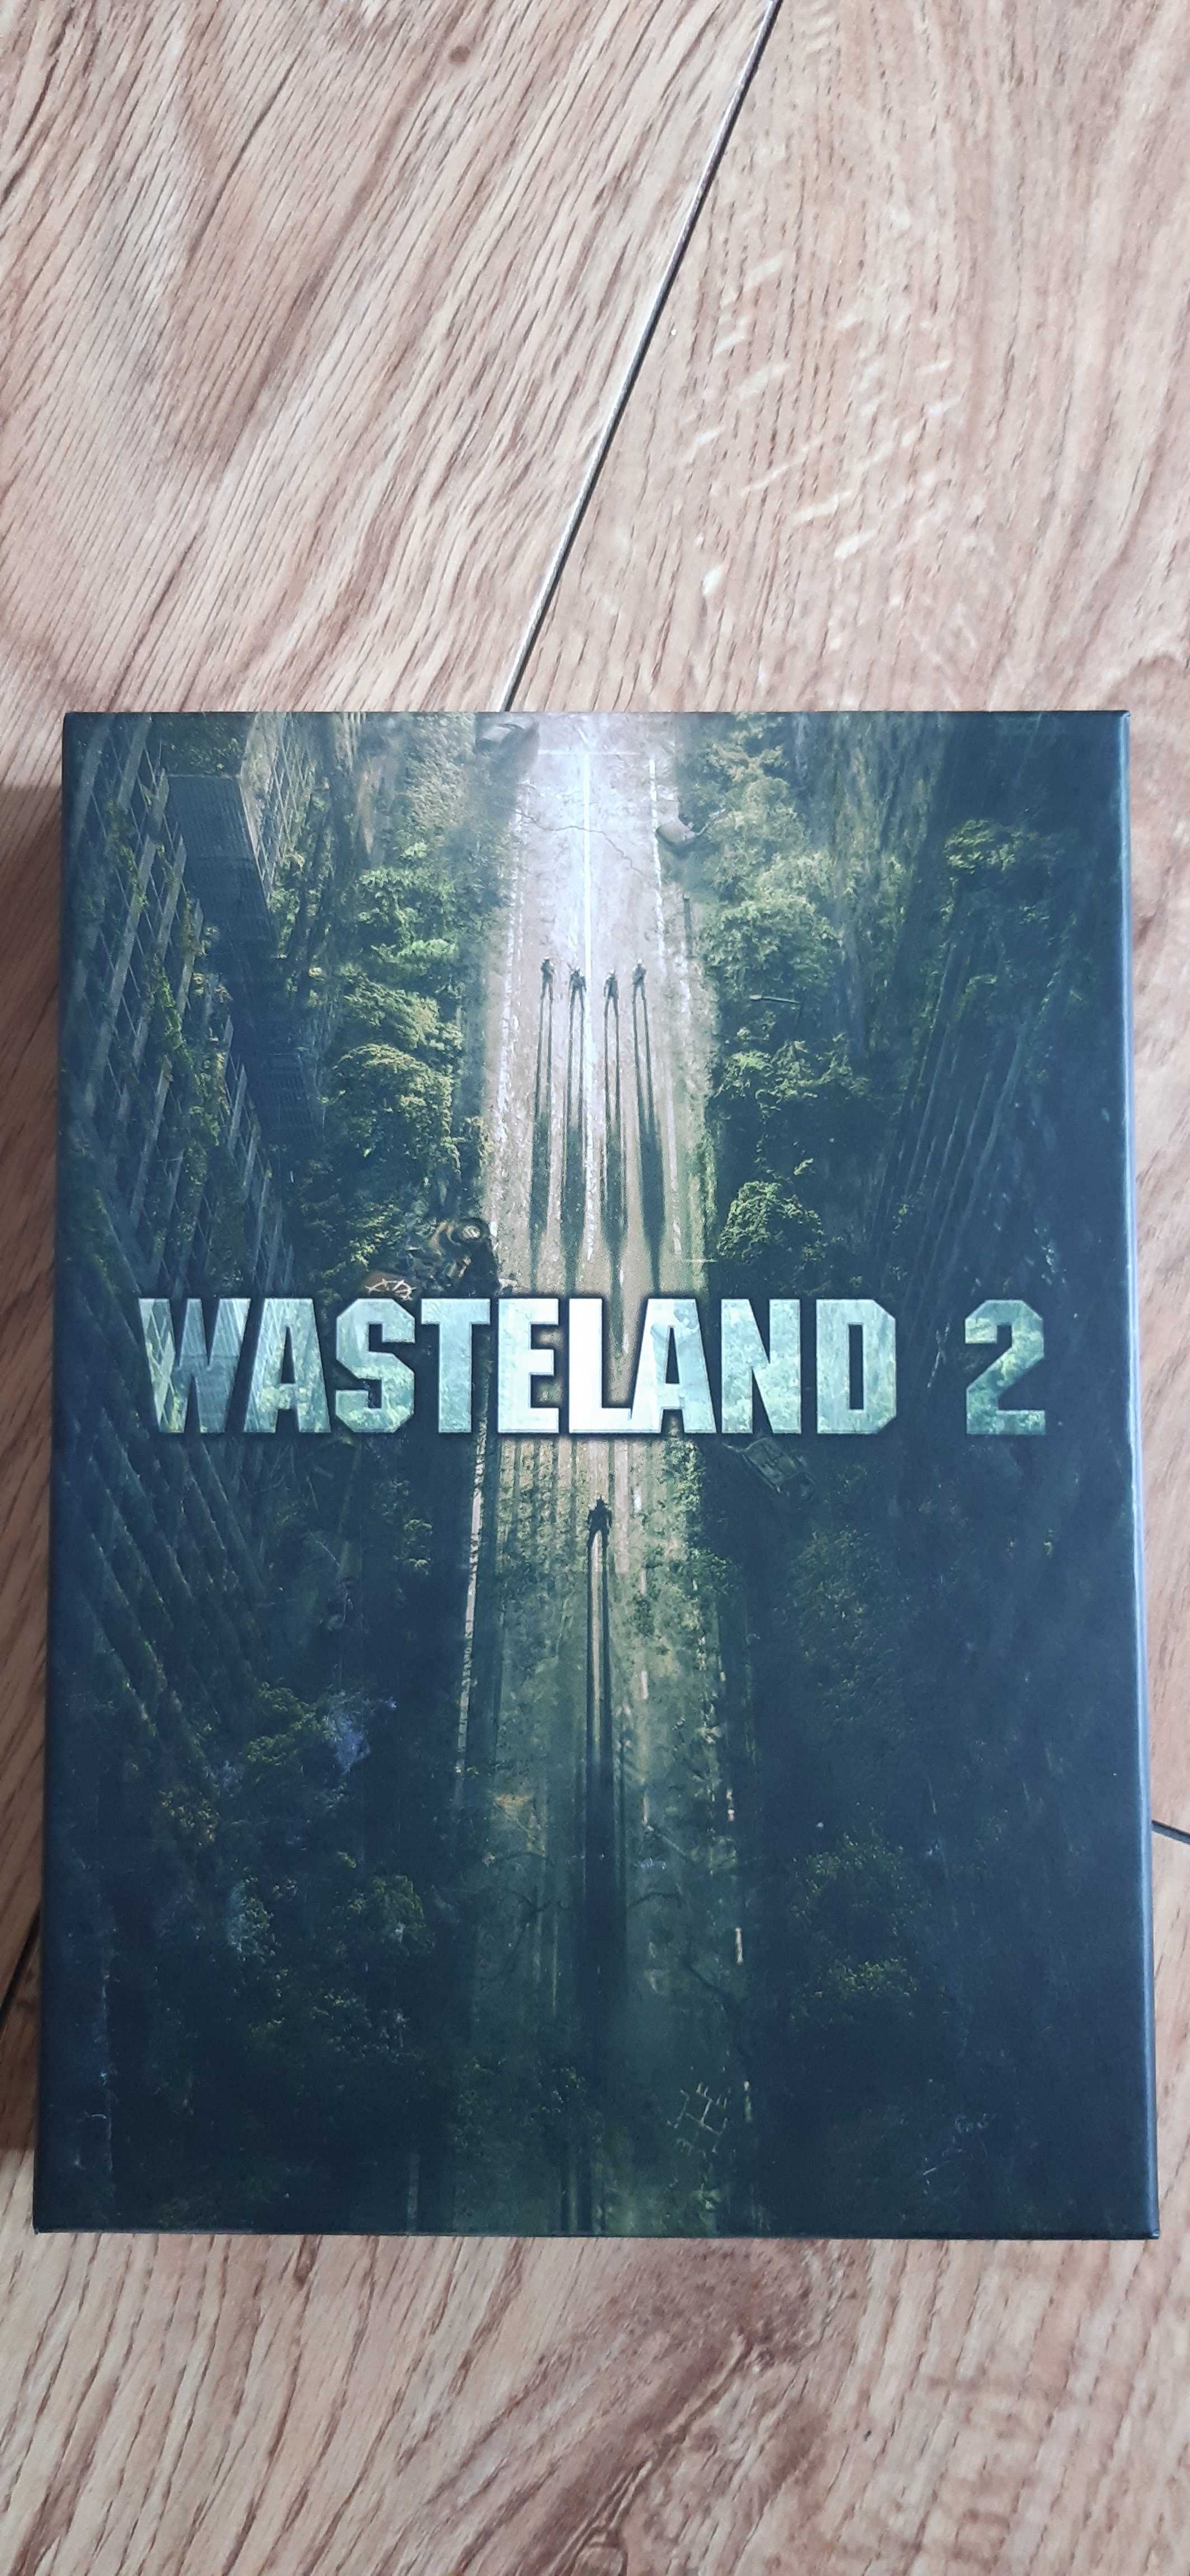 wasteland 2, dodatki box, artworki sztuk 5, instrukcja i mapa